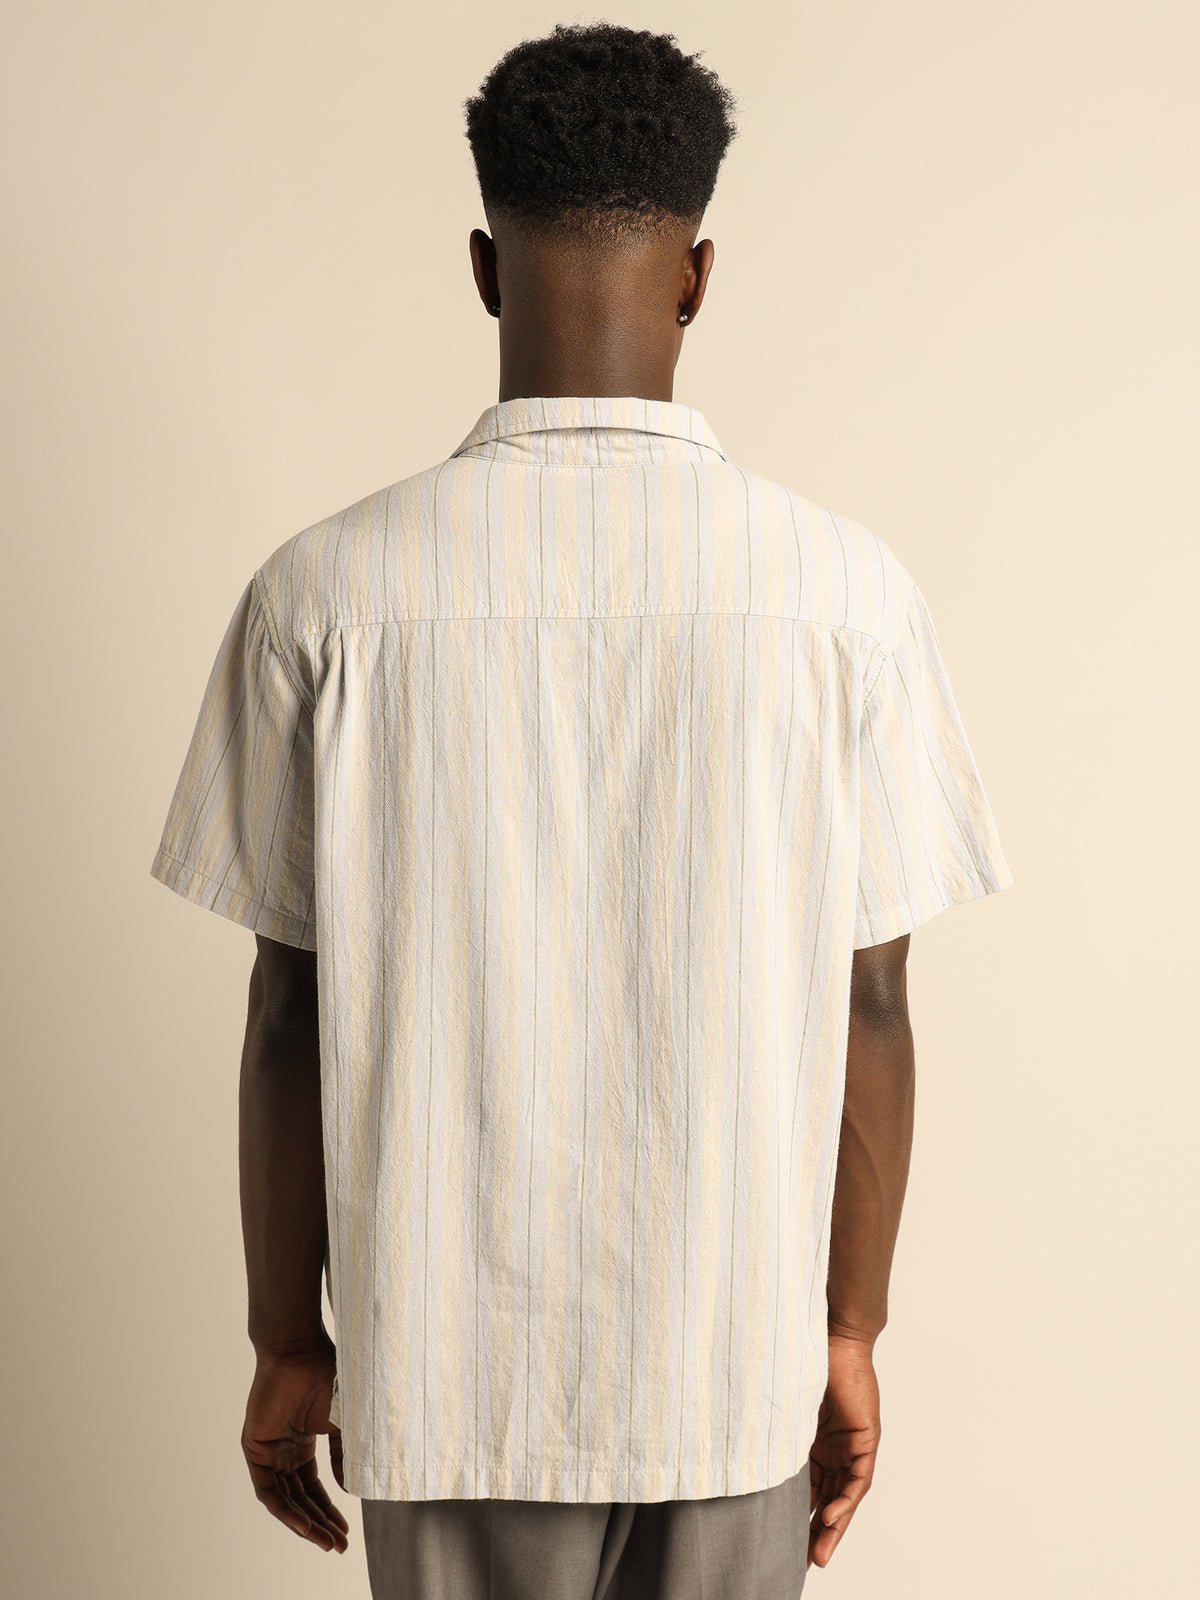 Quad Short Sleeve Shirt in Blue &amp; White